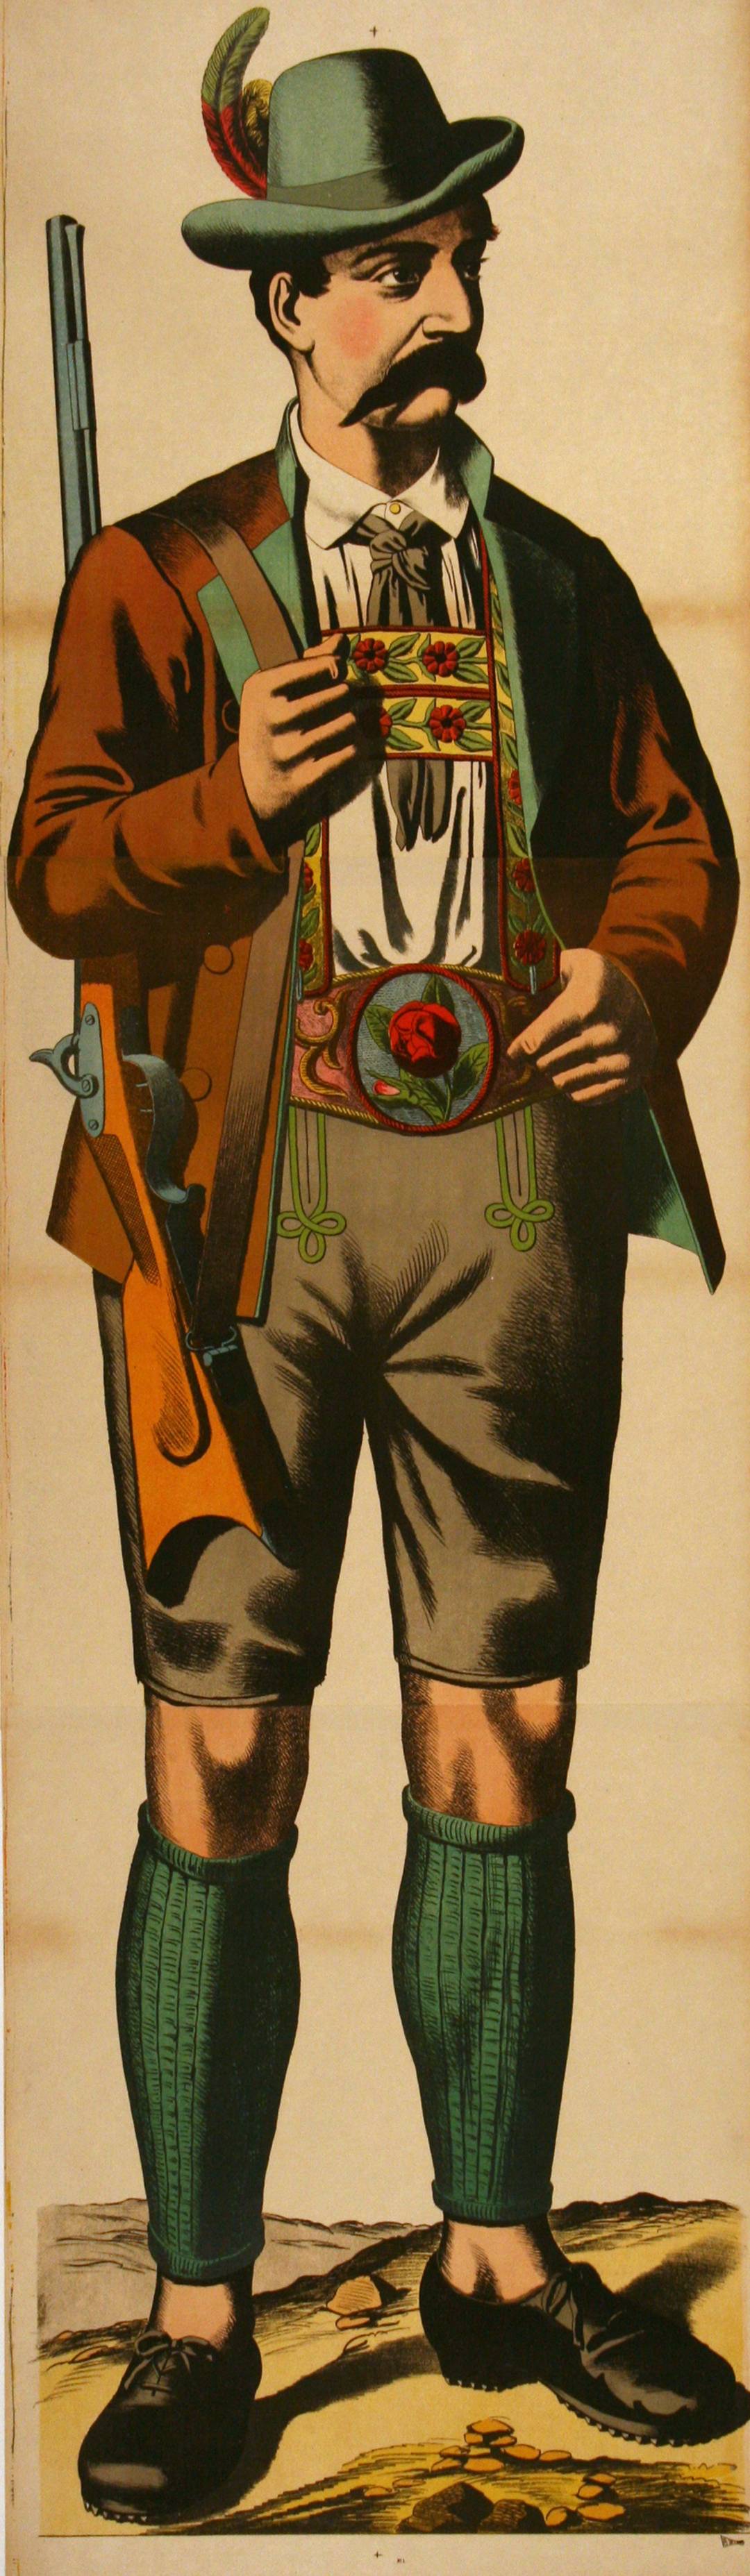 Vereniging Eentonig nauwkeurig Original C1880 Vintage Poster - Man in Lederhosen 01 - Wissembourg  Collection – The Ross Art Group